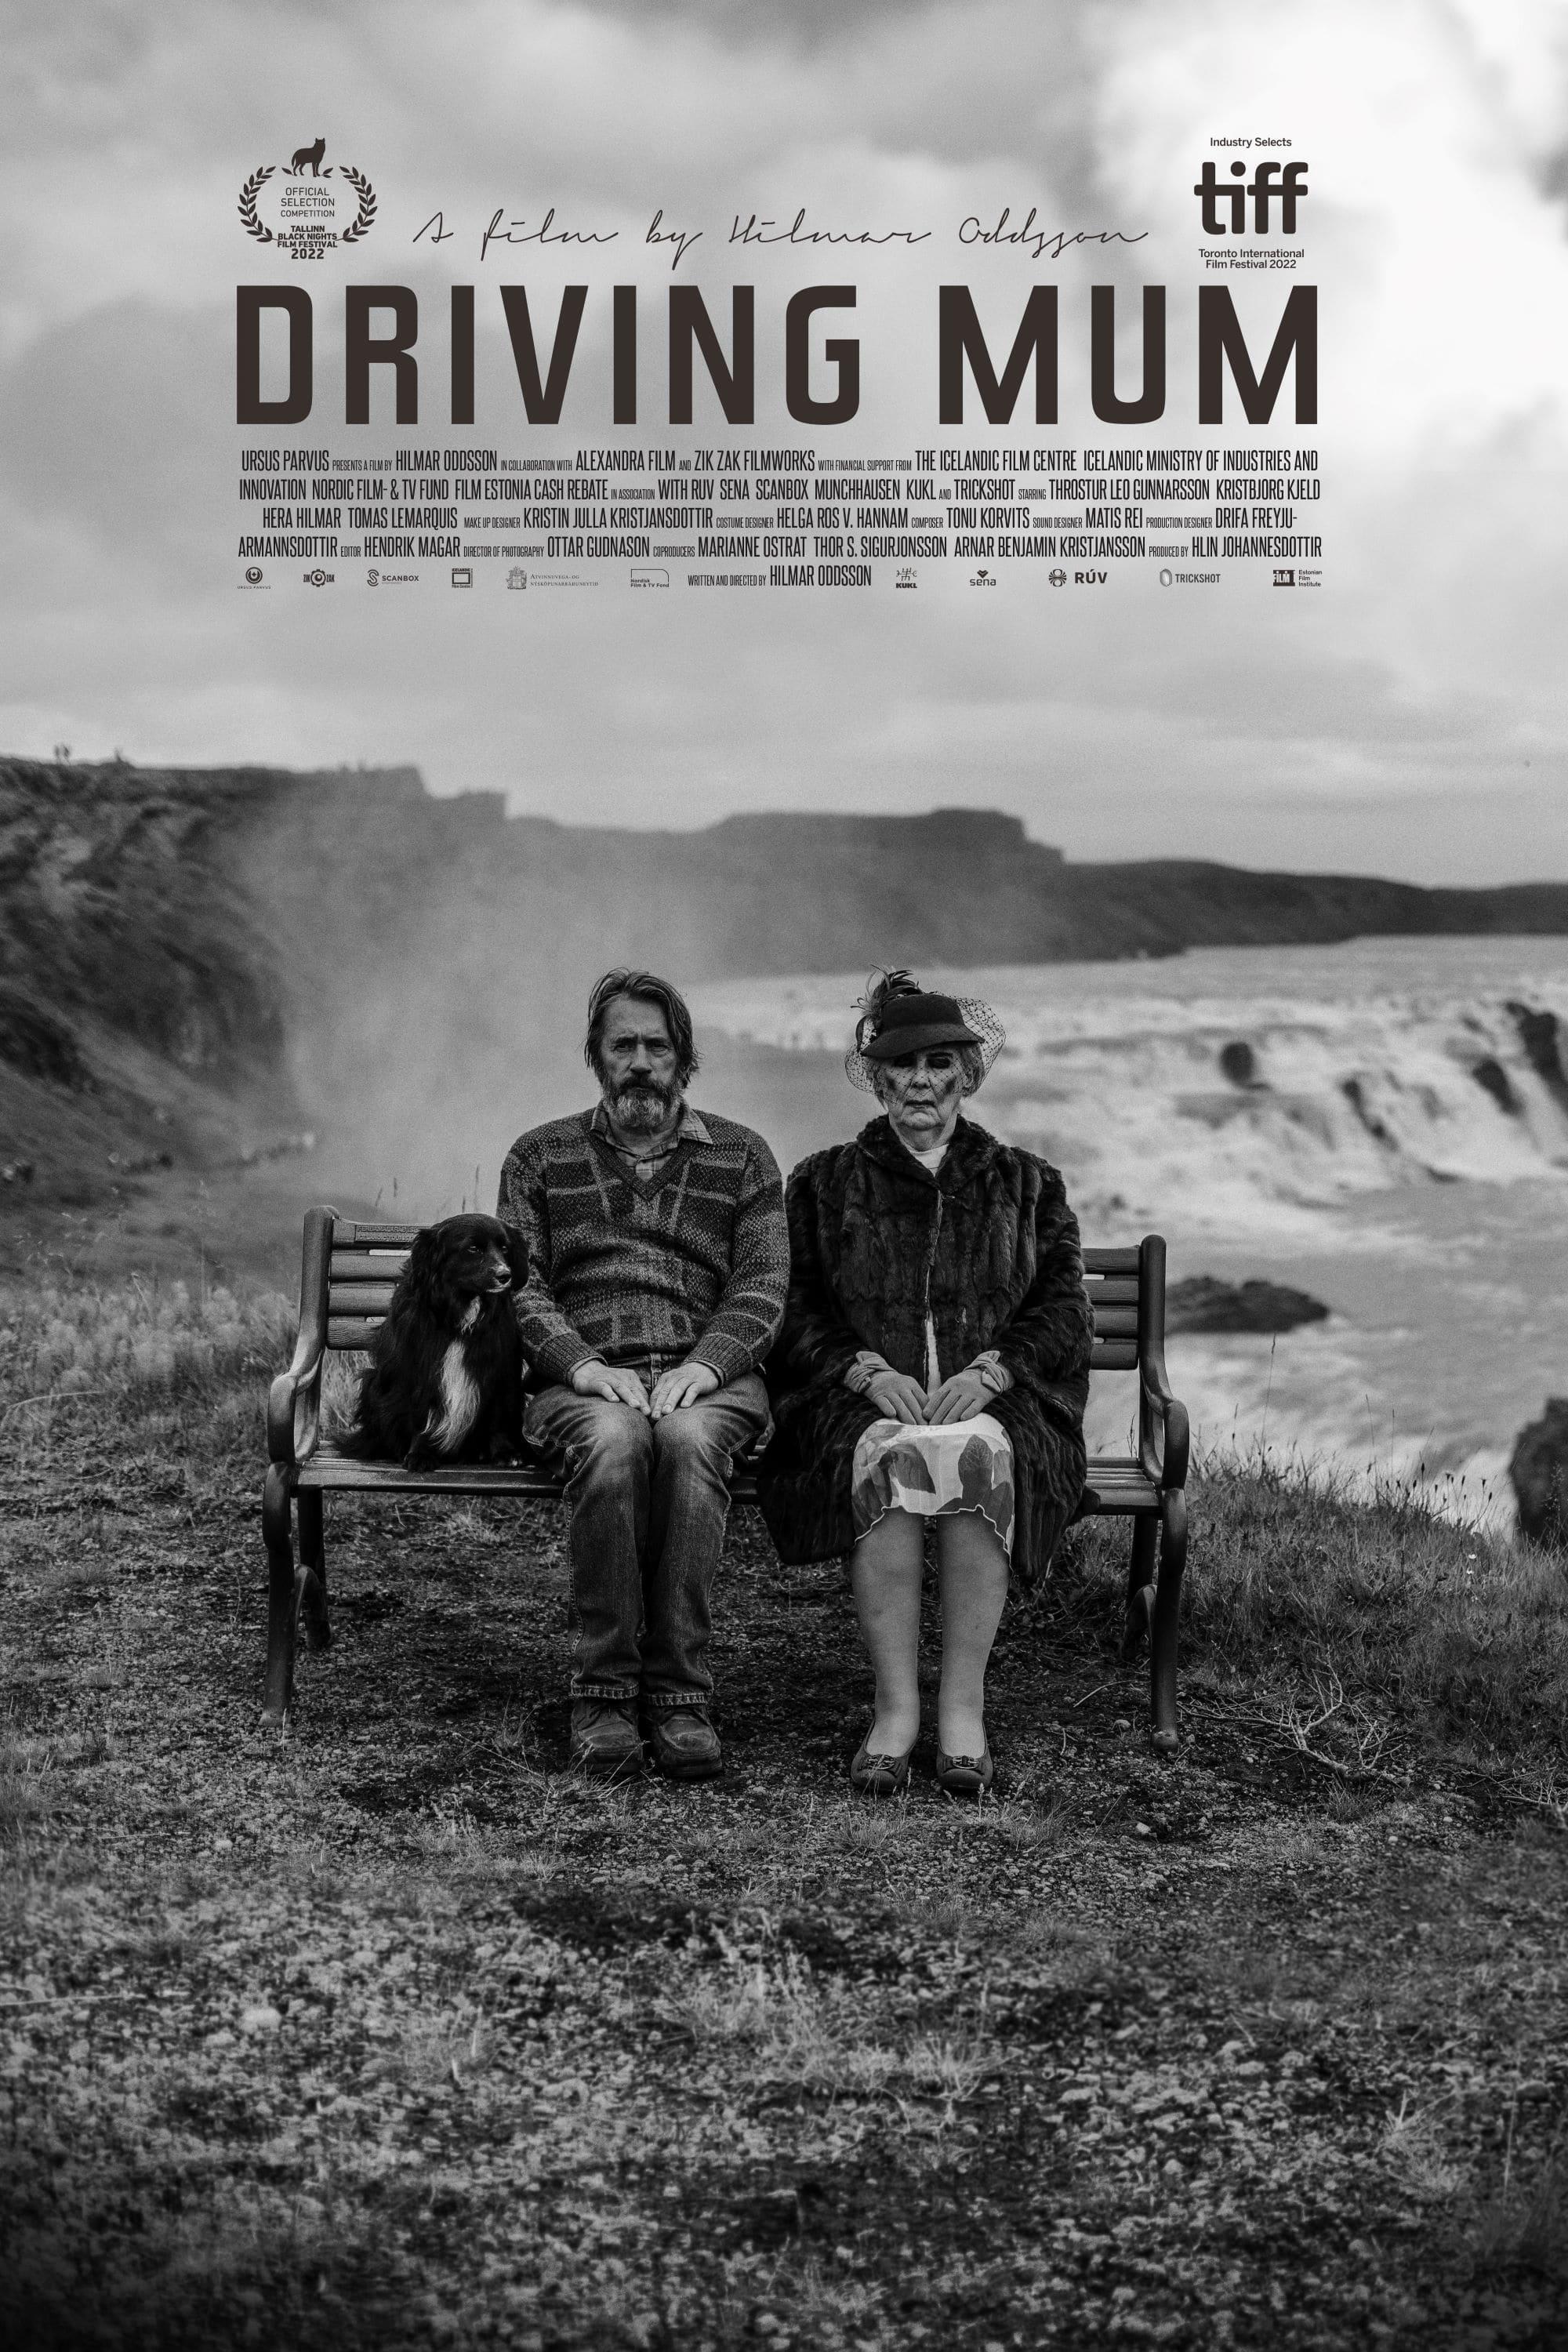 Driving Mum poster